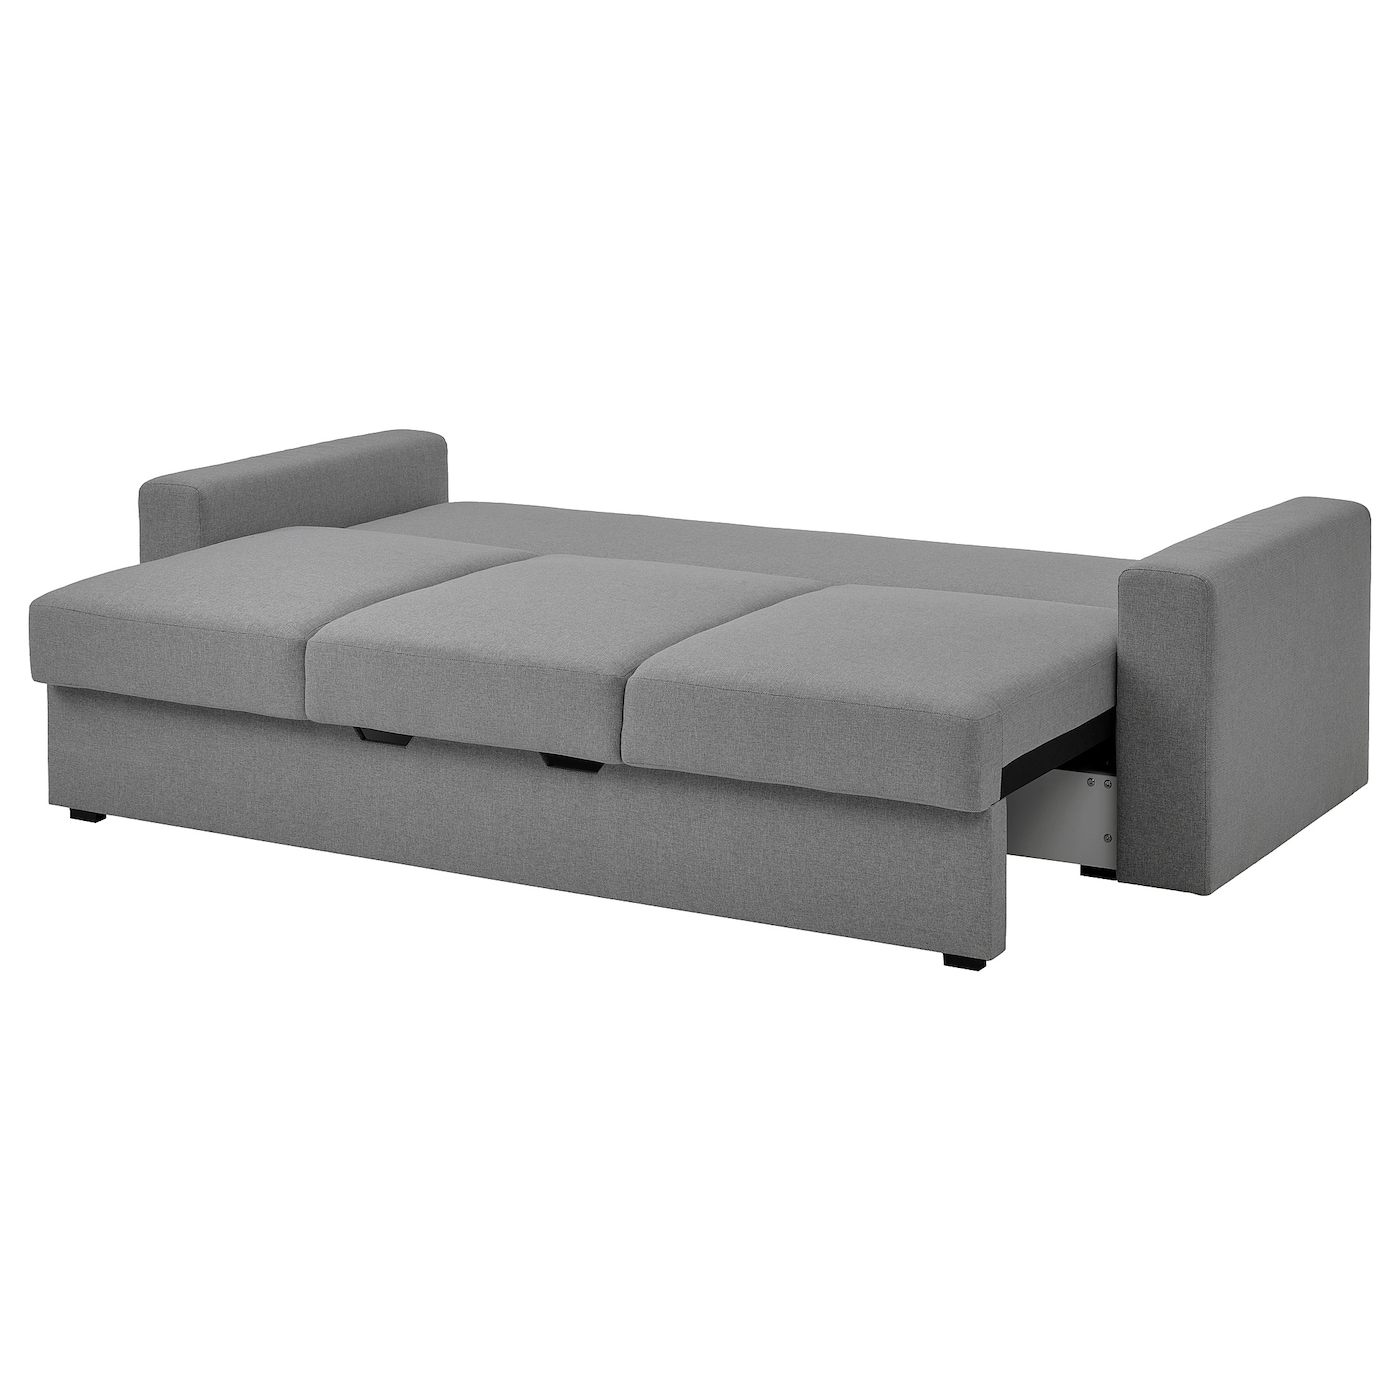 3-местный диван-кровать - IKEA BÅRSLÖV/BARSLOV/БЁРСЛОВ ИКЕА, 236х109х86 см, серый